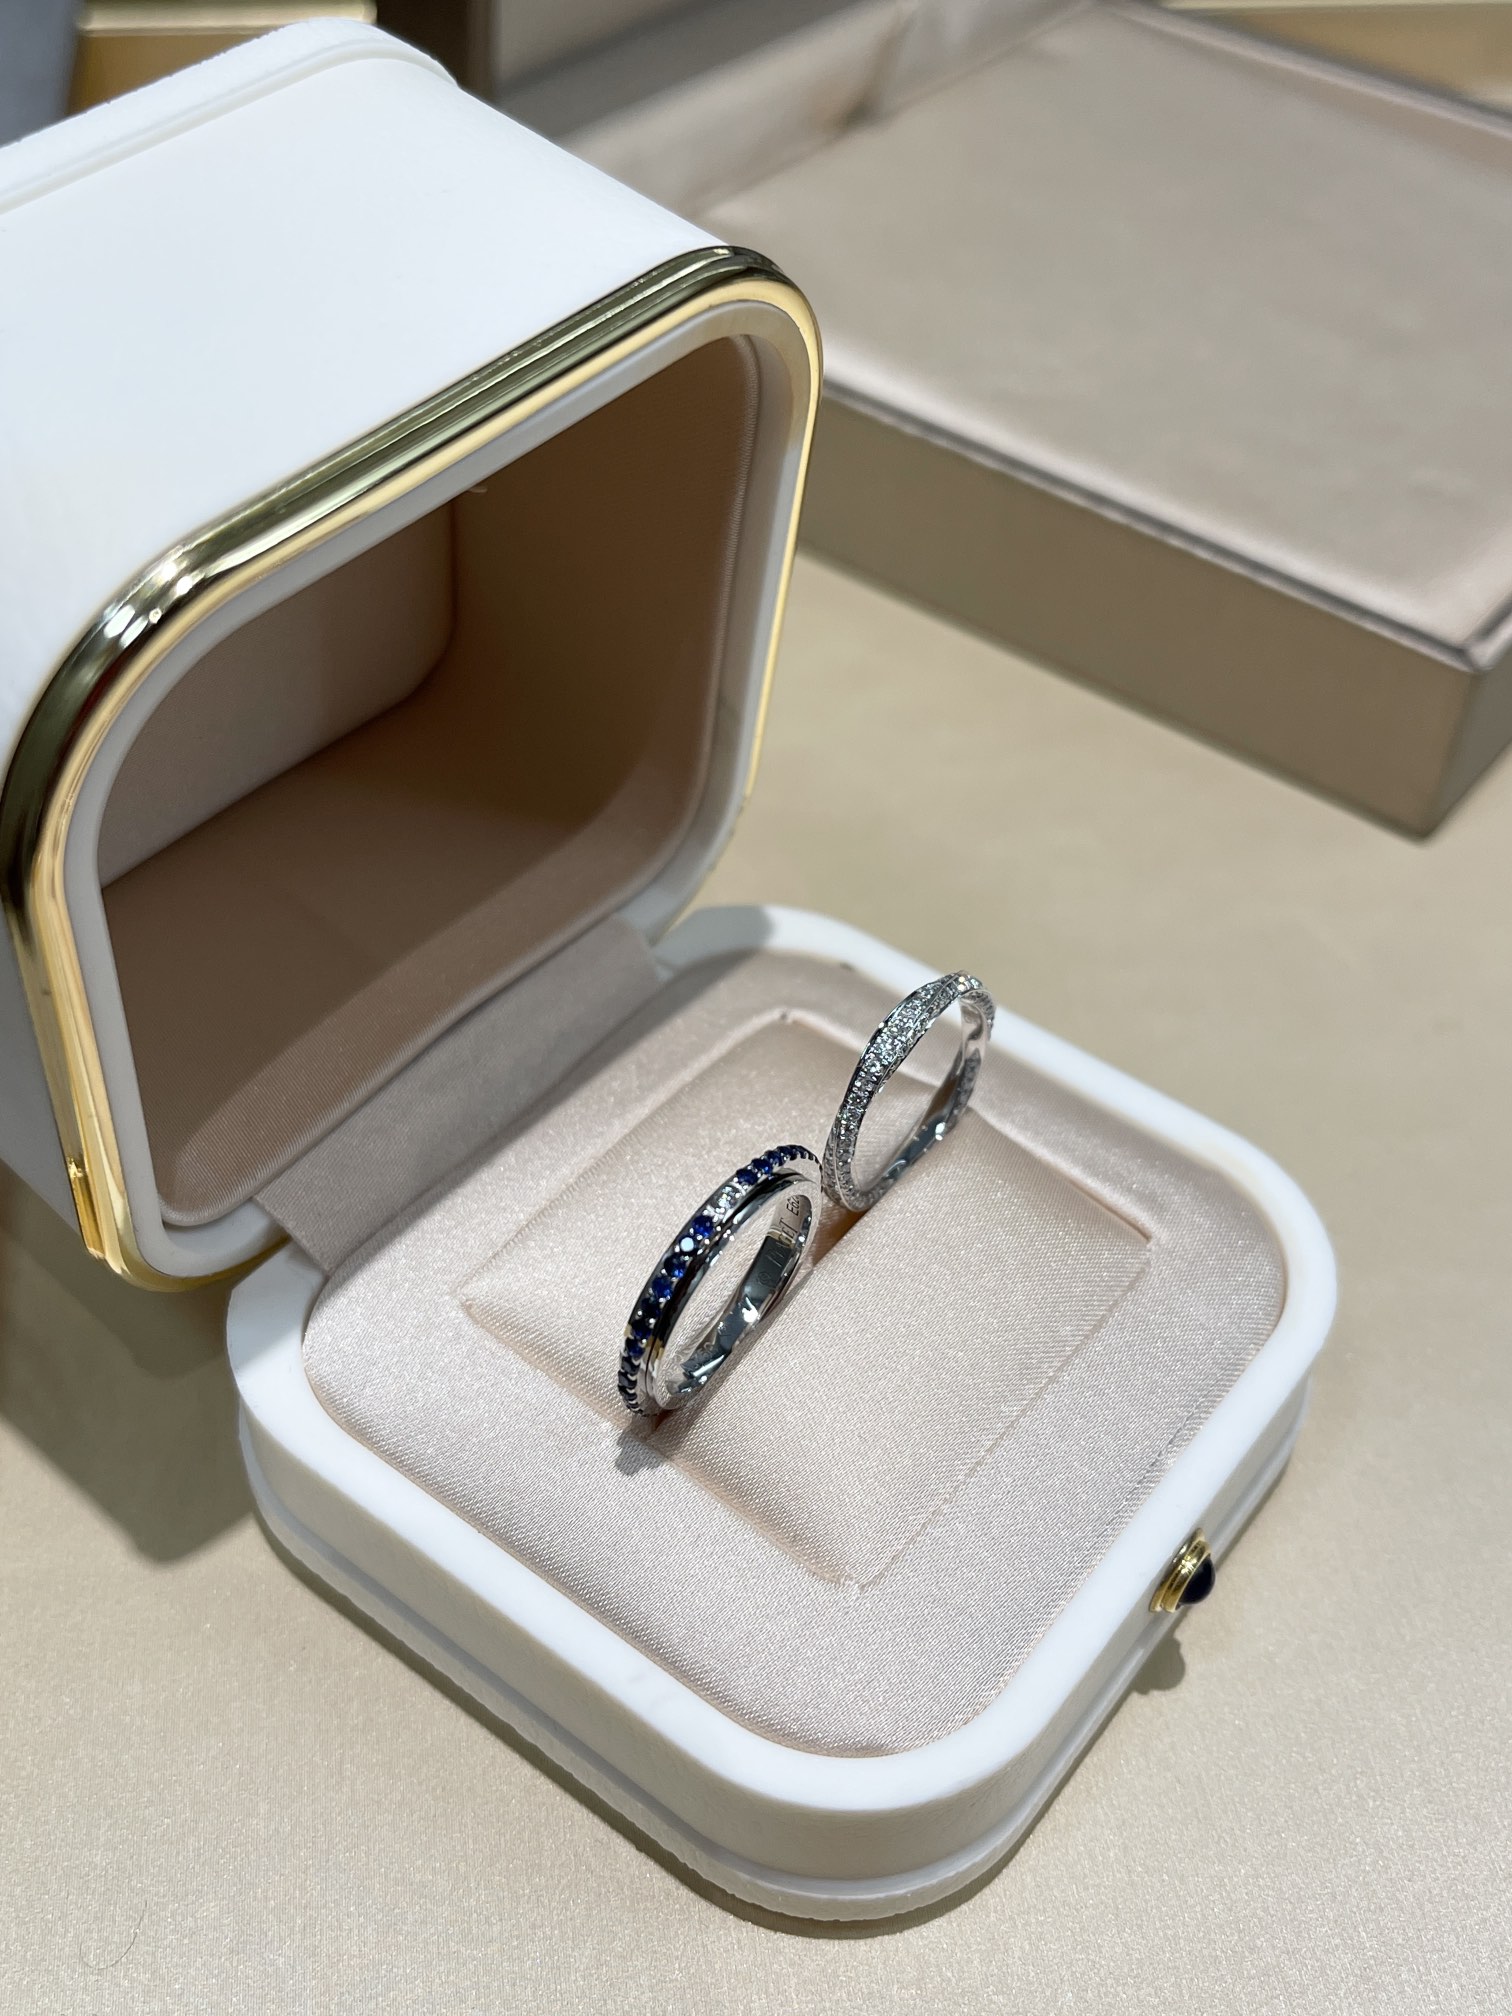 Piaget לִקְנוֹת תכשיטים טבעת AAA+ העתק
 כחול קבע עם יהלומים